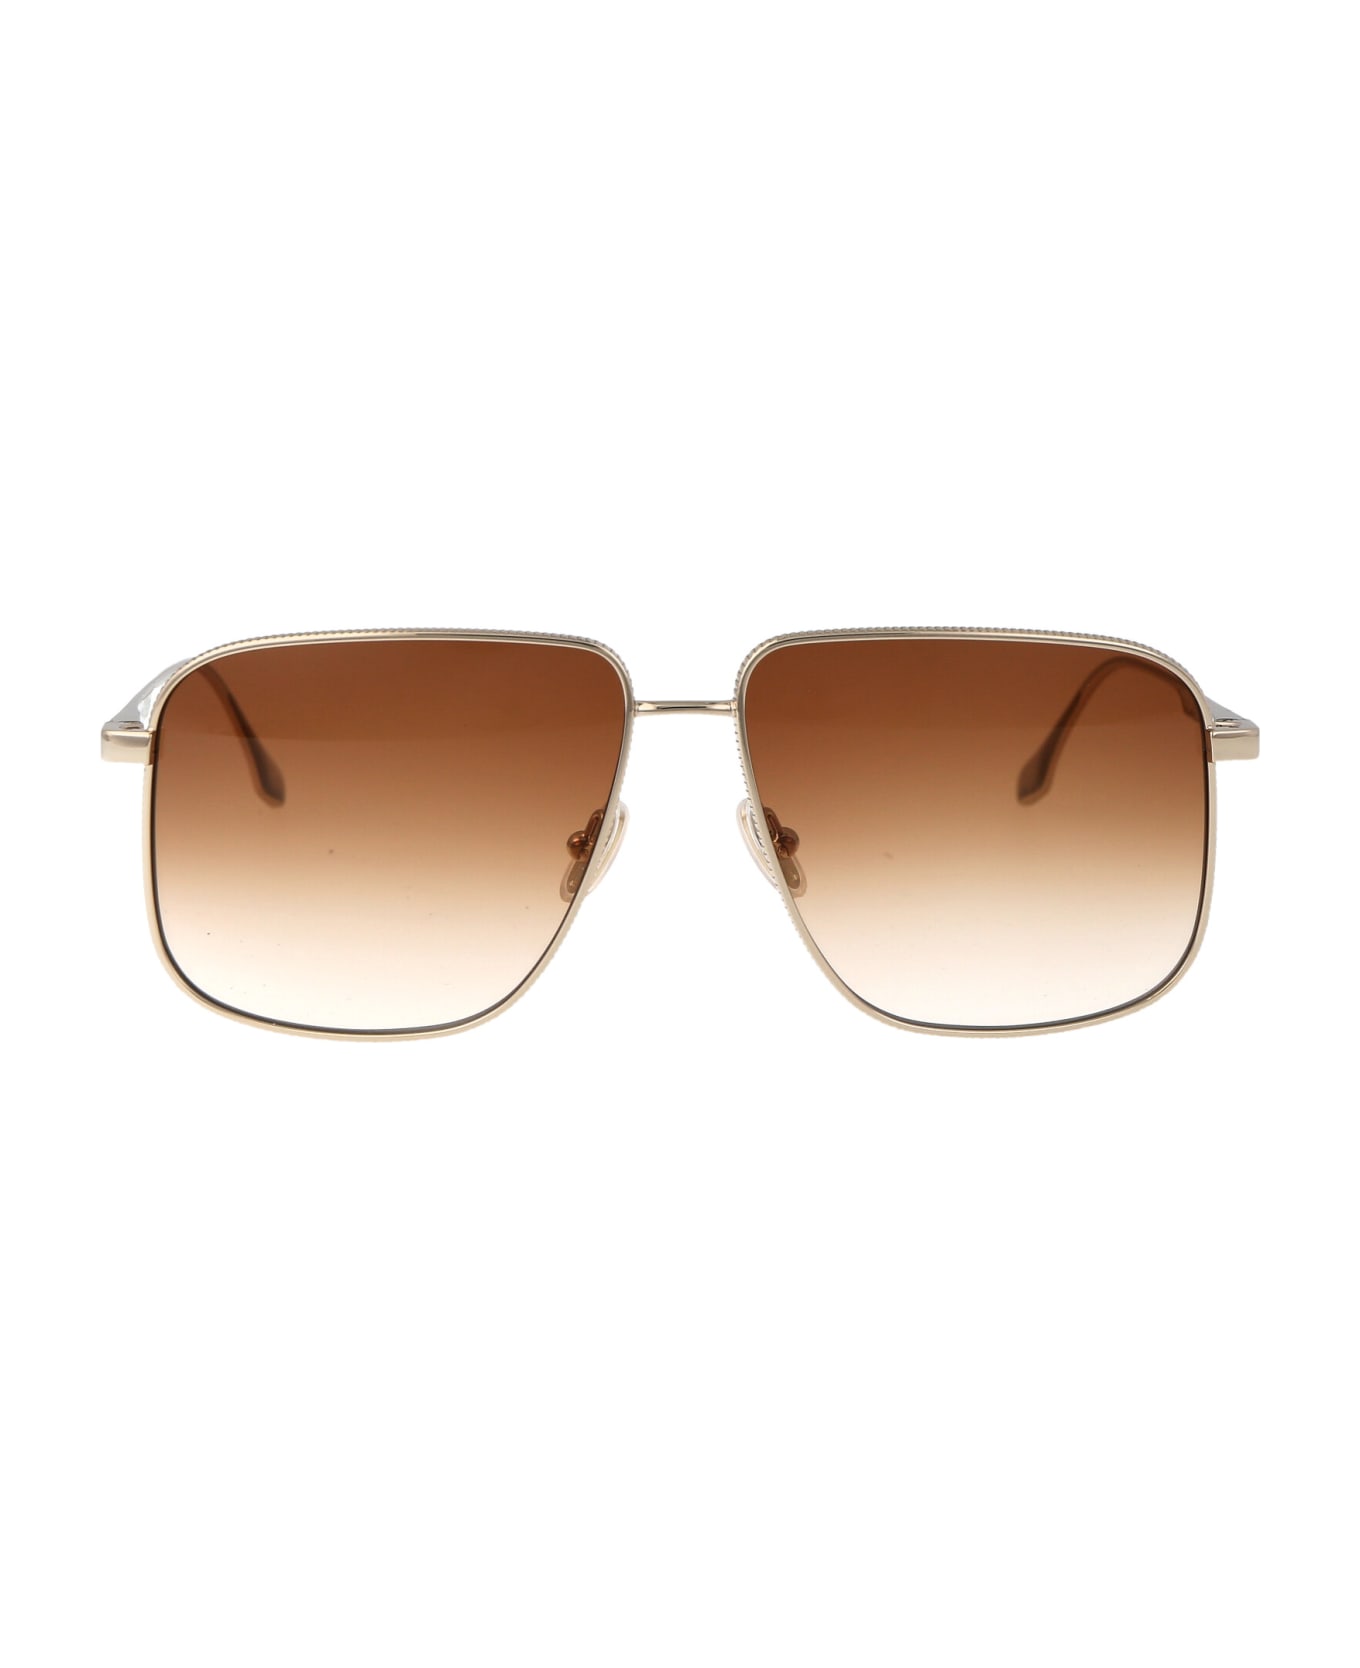 Victoria Beckham Vb243s Sunglasses - 723 GOLD/HONEY GRADIENT